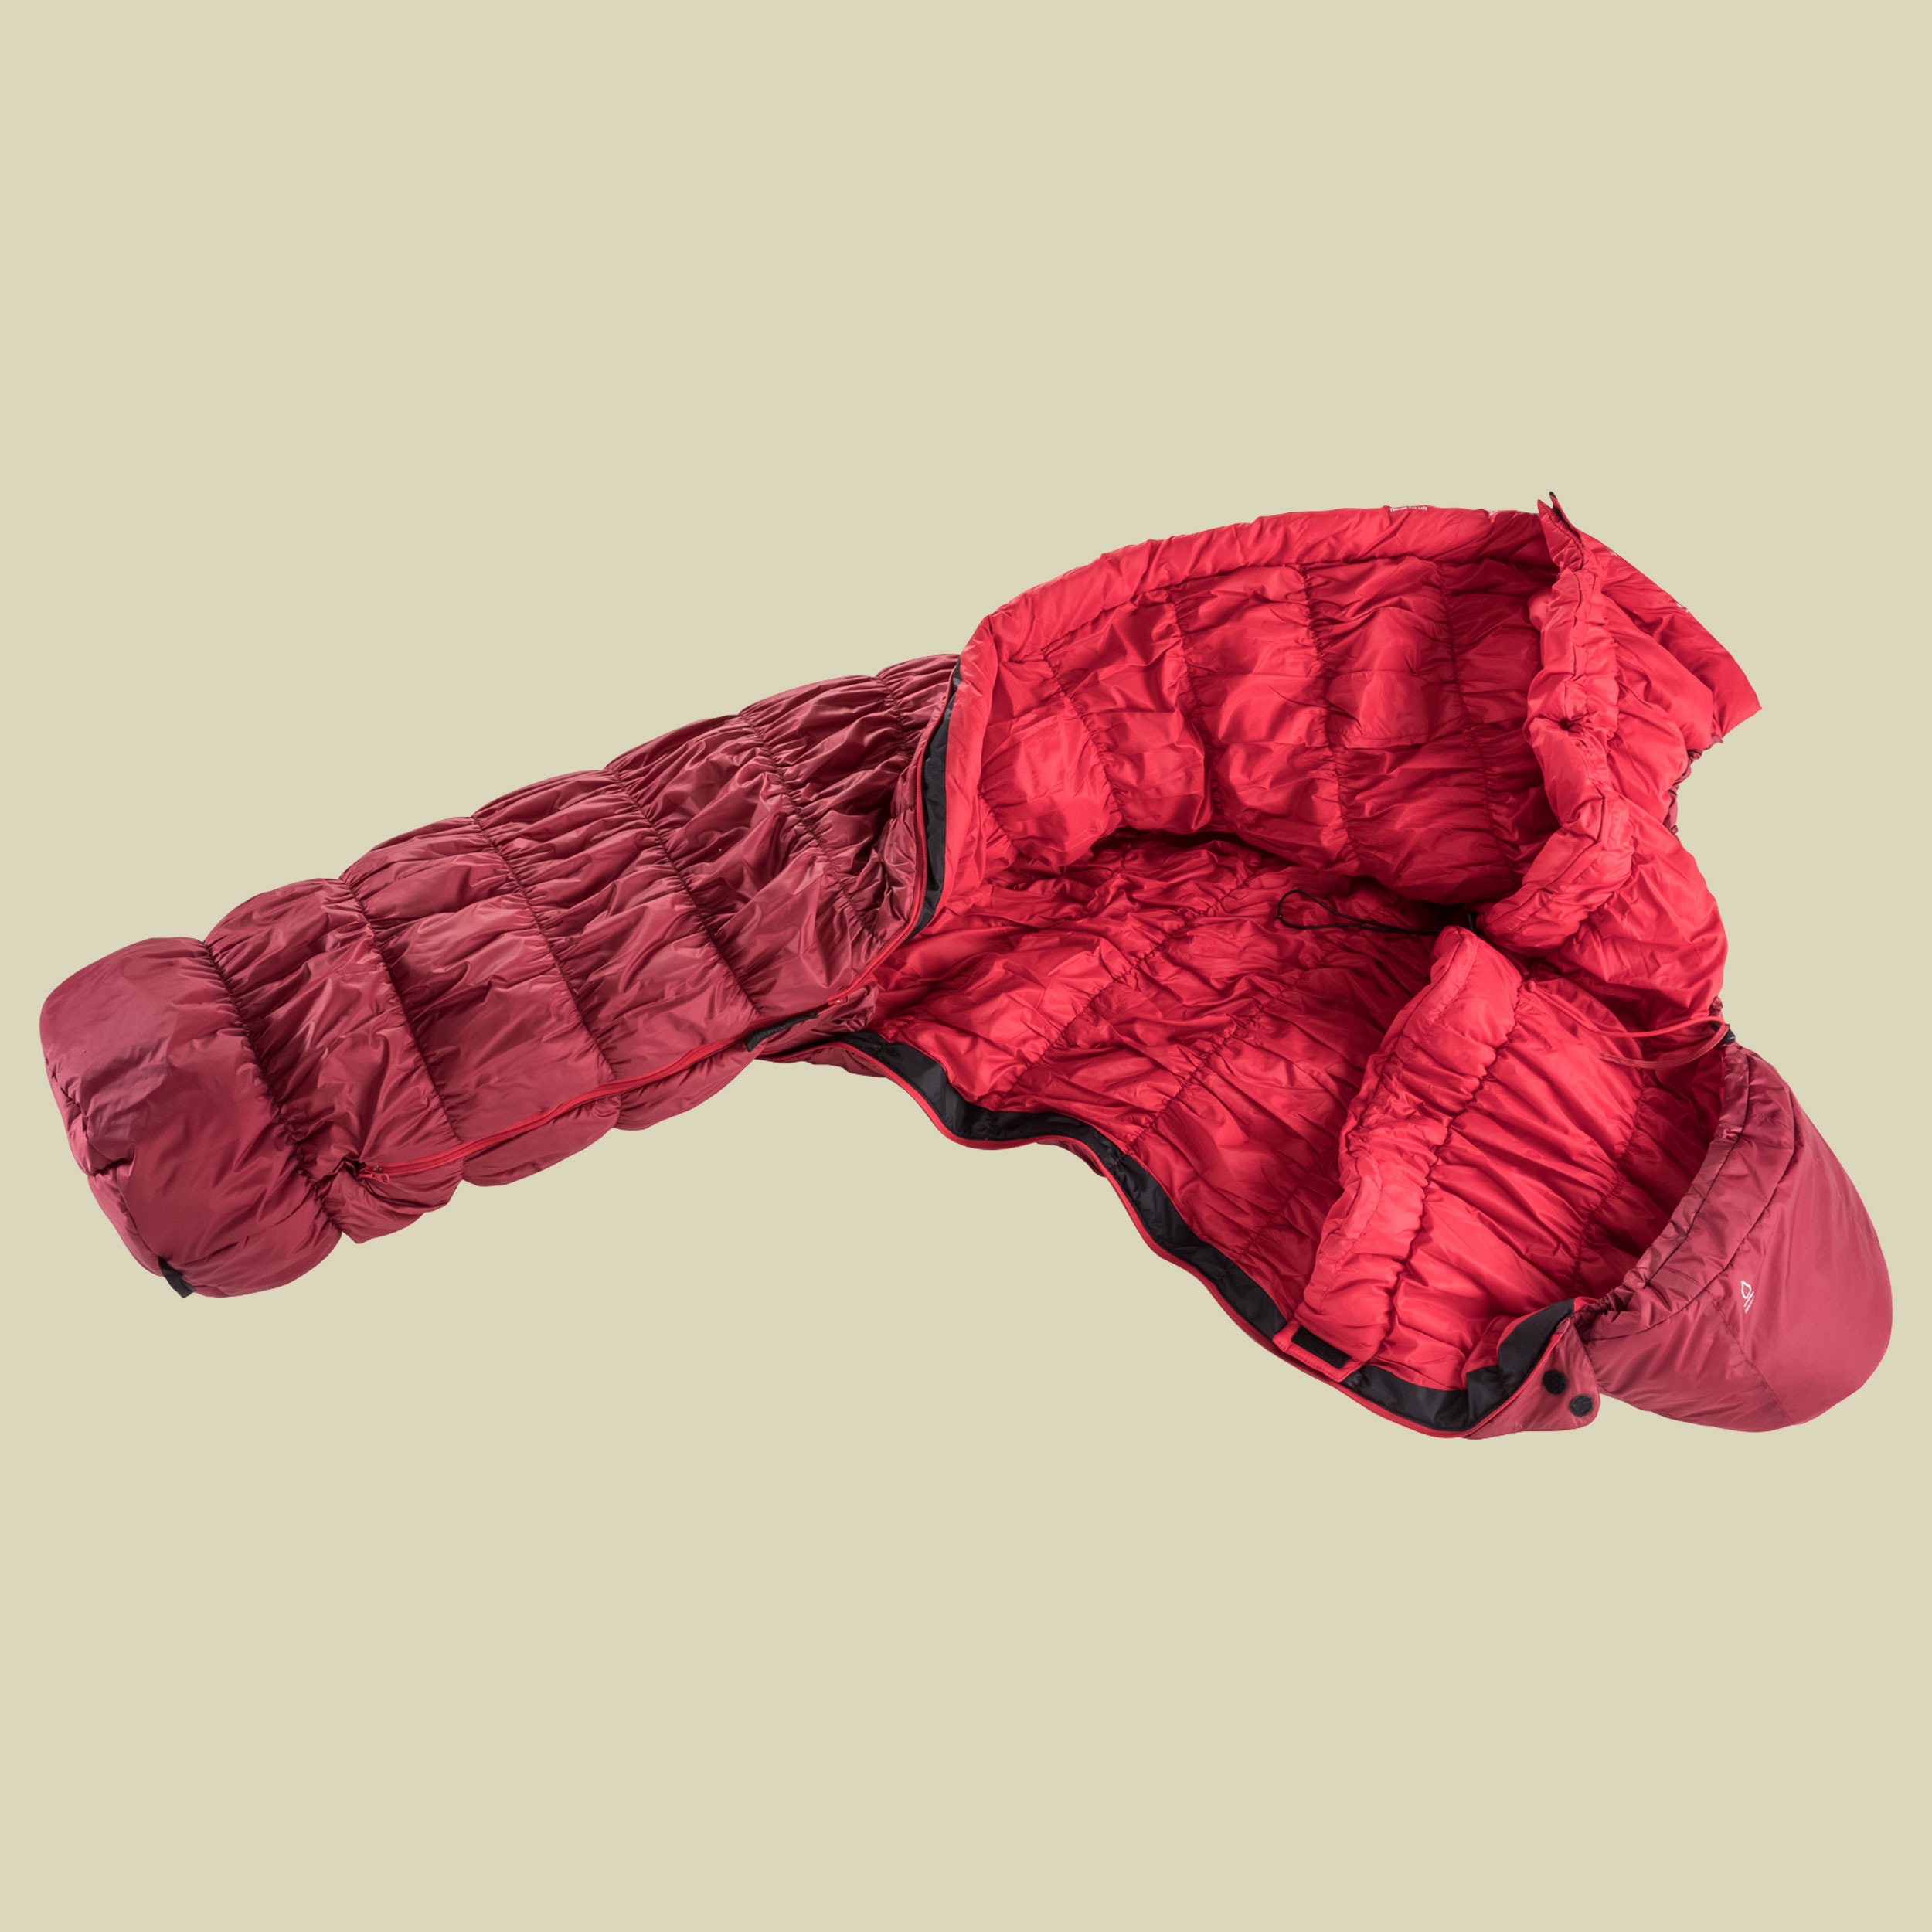 Exosphere -6 Grad bis Körpergröße 185 cm Farbe cranberry-fire, Reißverschluss links